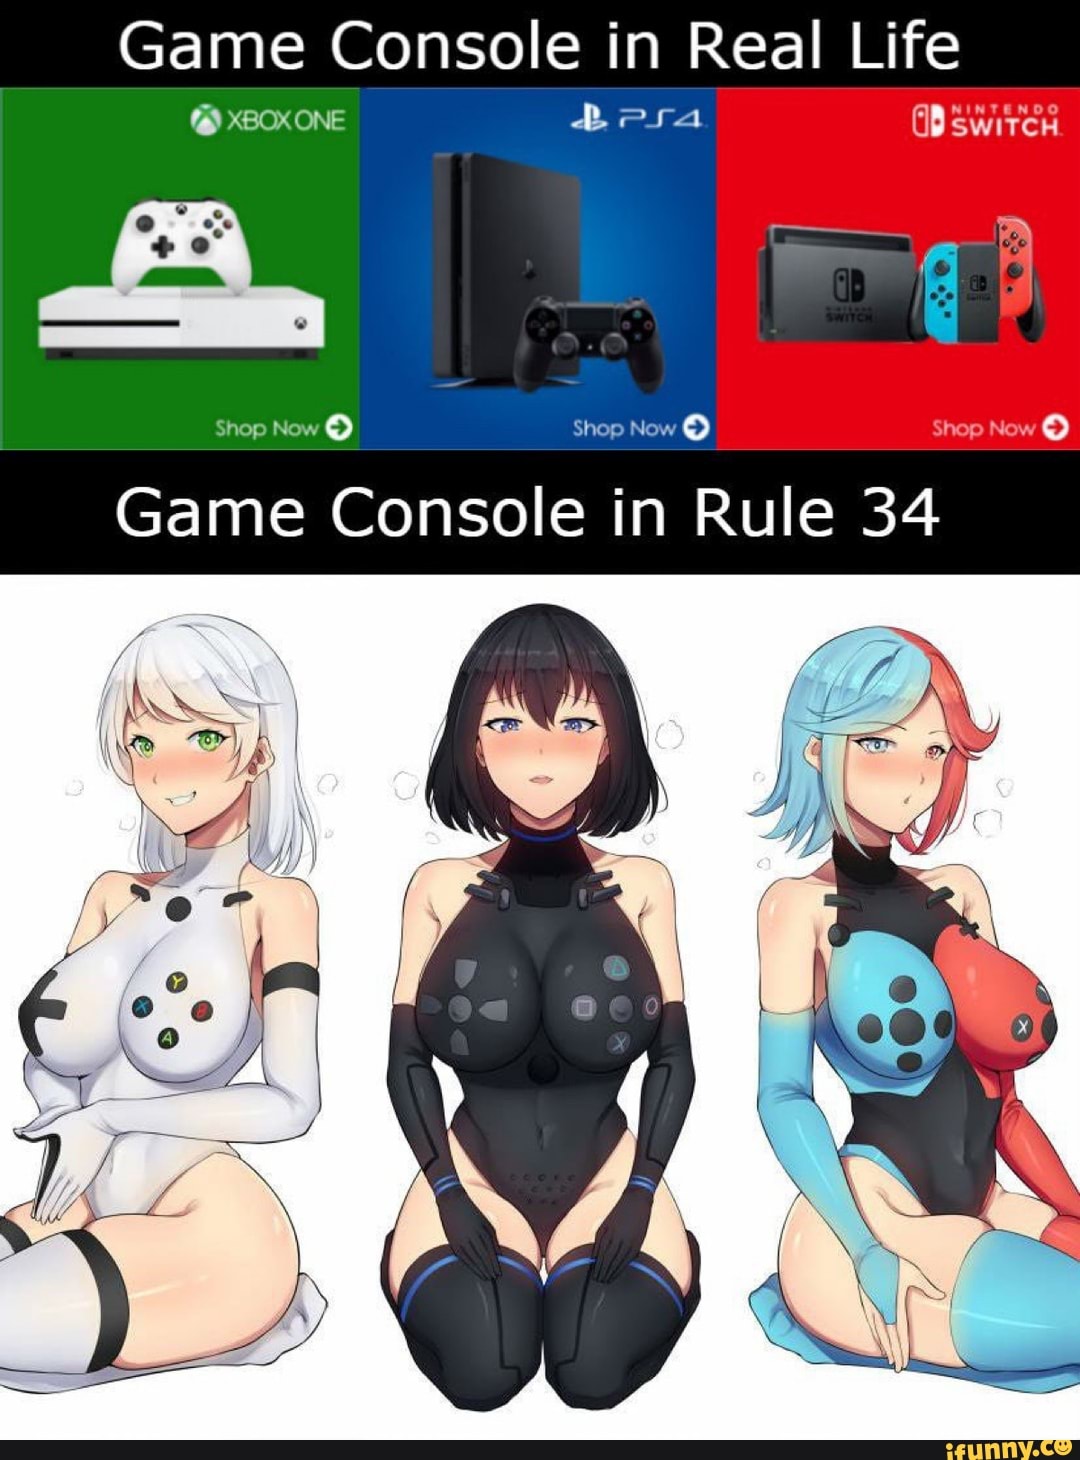 Consoles rule 34